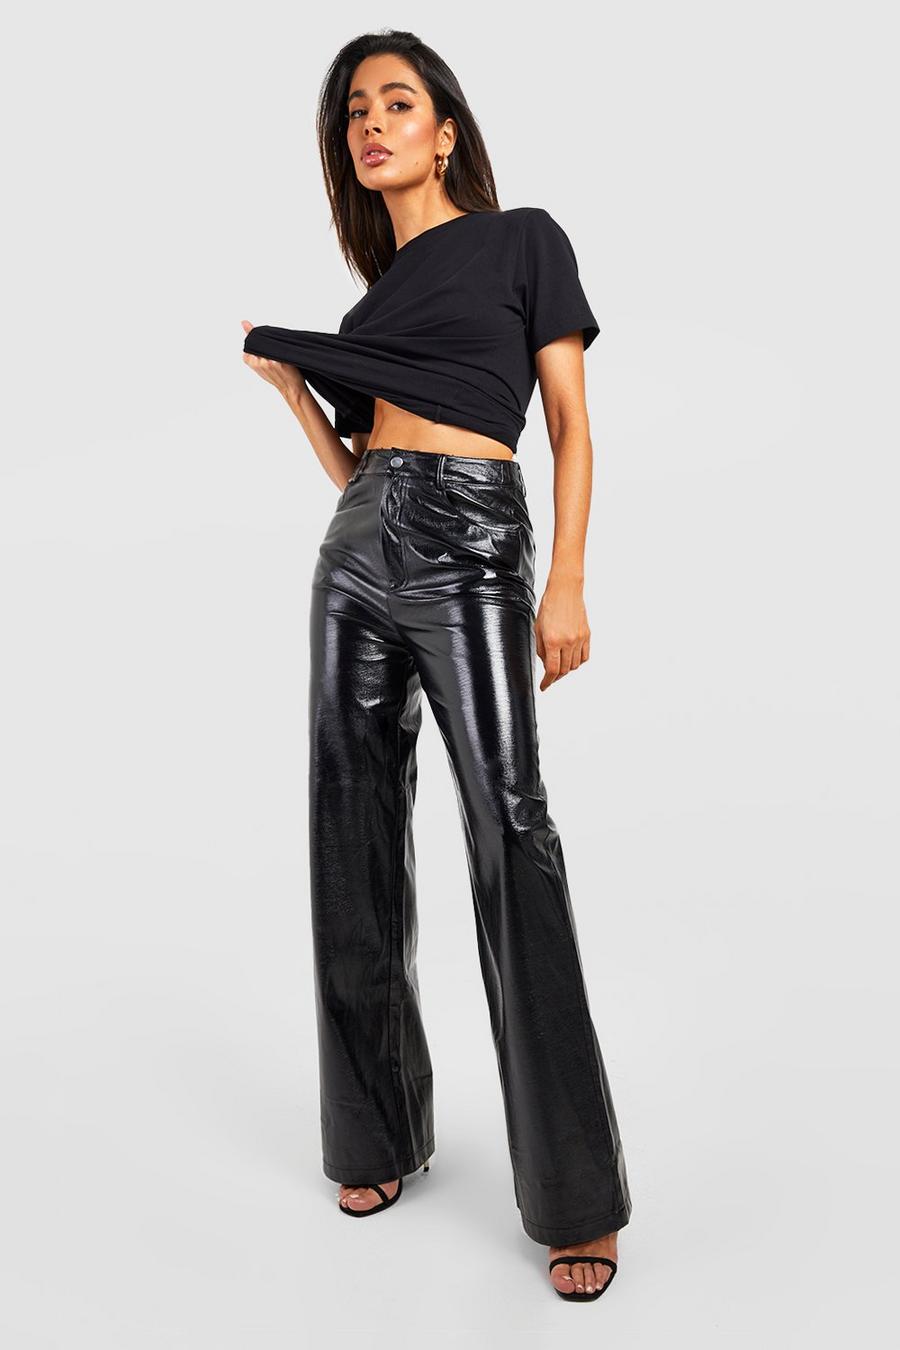 Black High Waisted Metallic Full Length Trousers